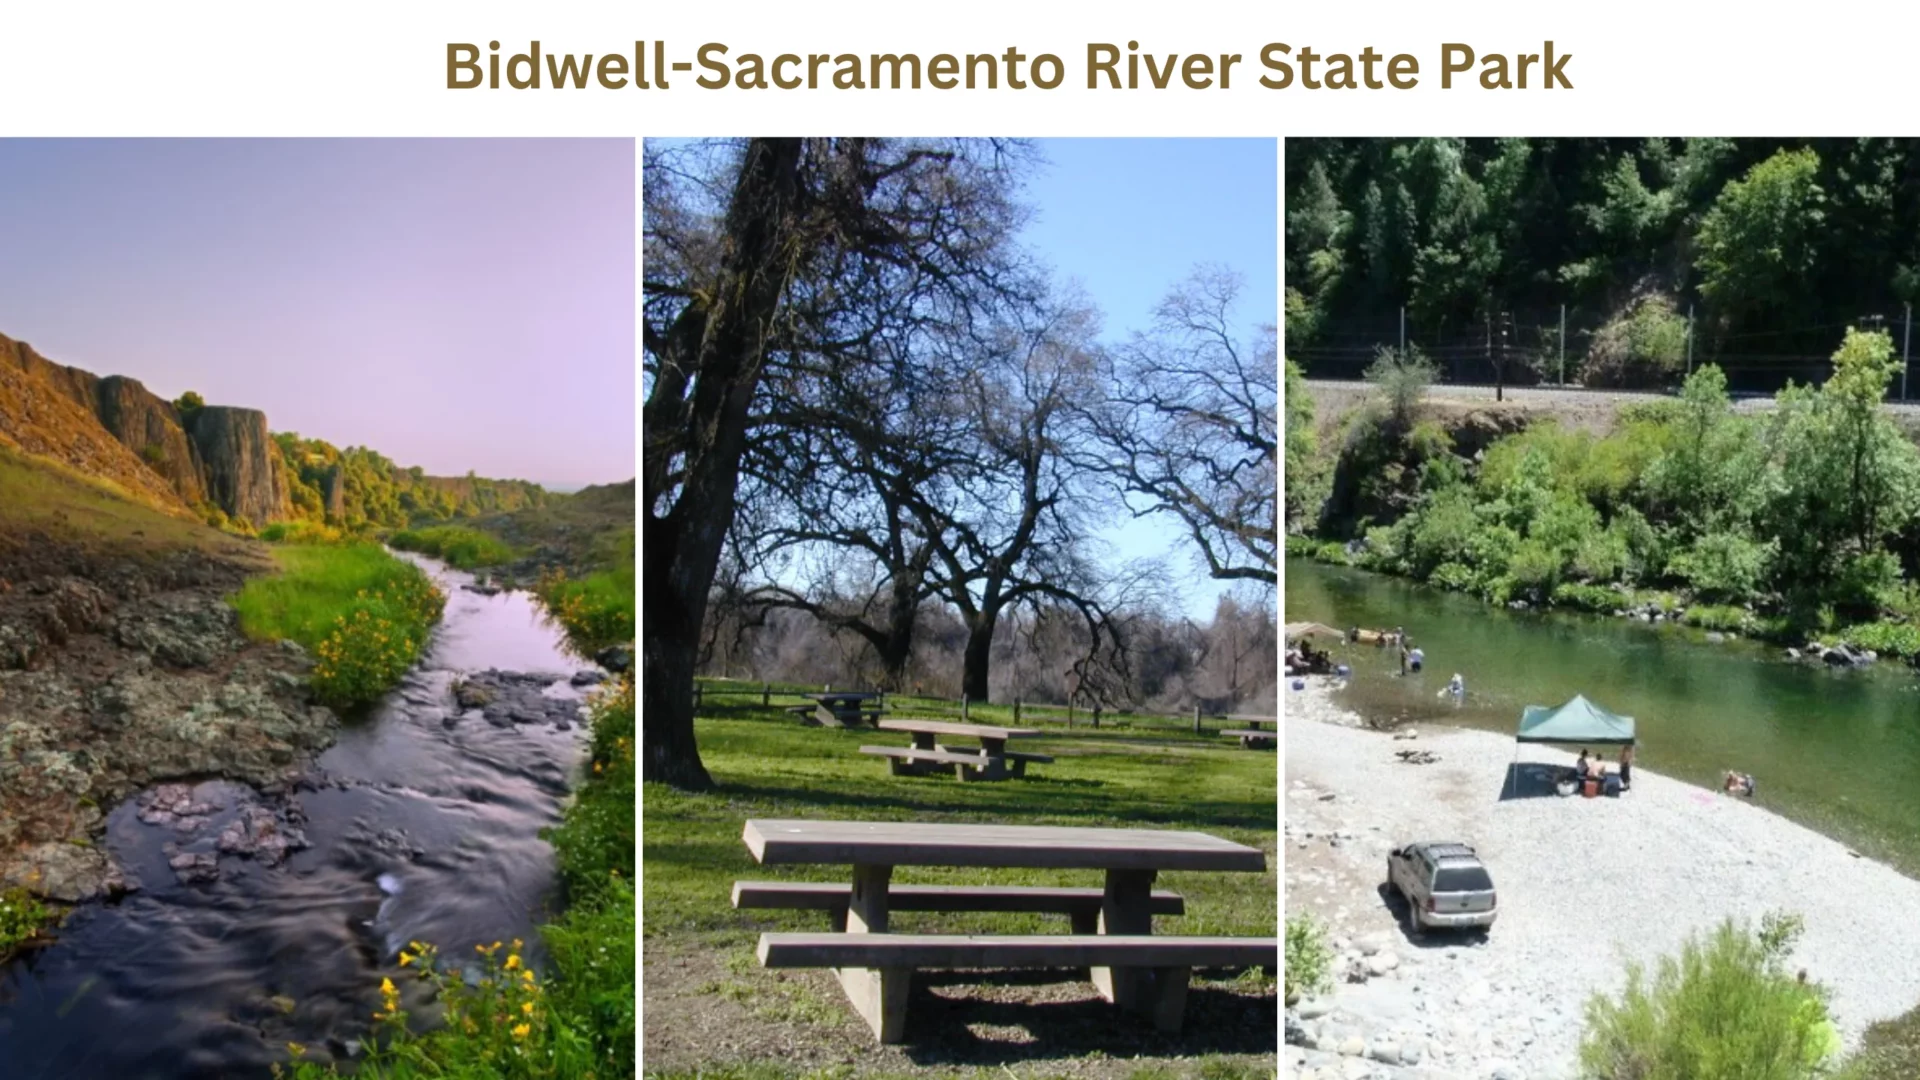 Bidwell-Sacramento River State Park